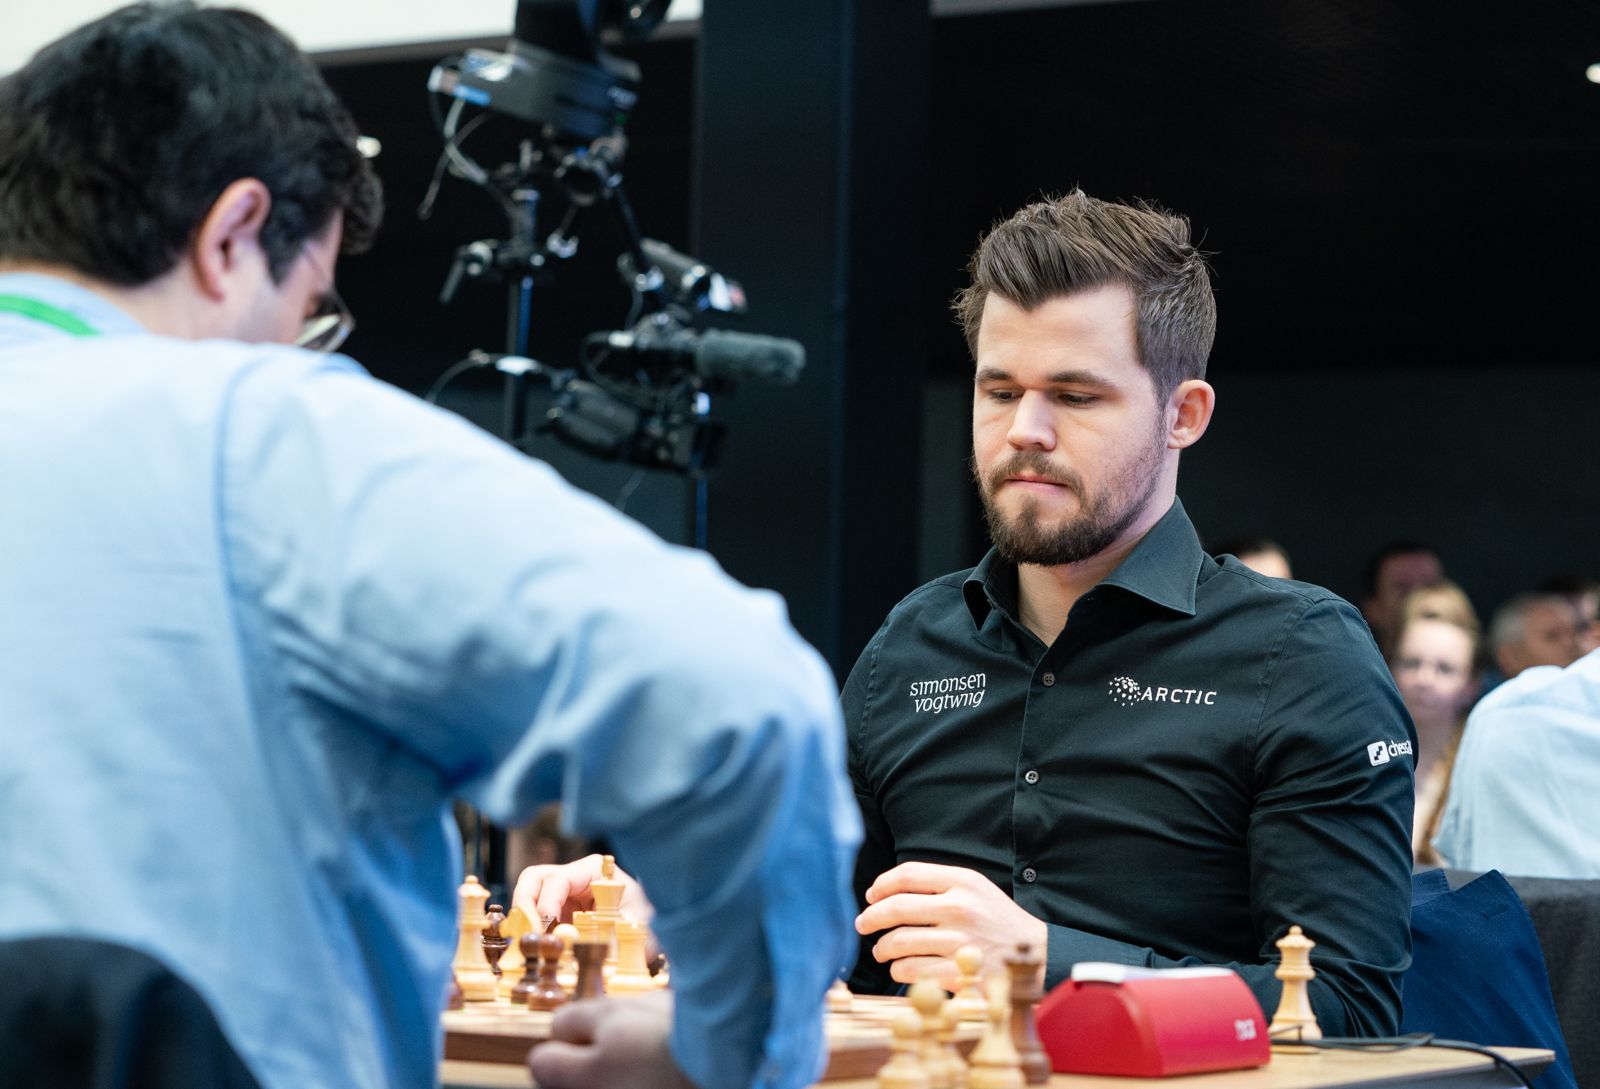 Chess Terminator' robot takes on former champ Kramnik in blitz match